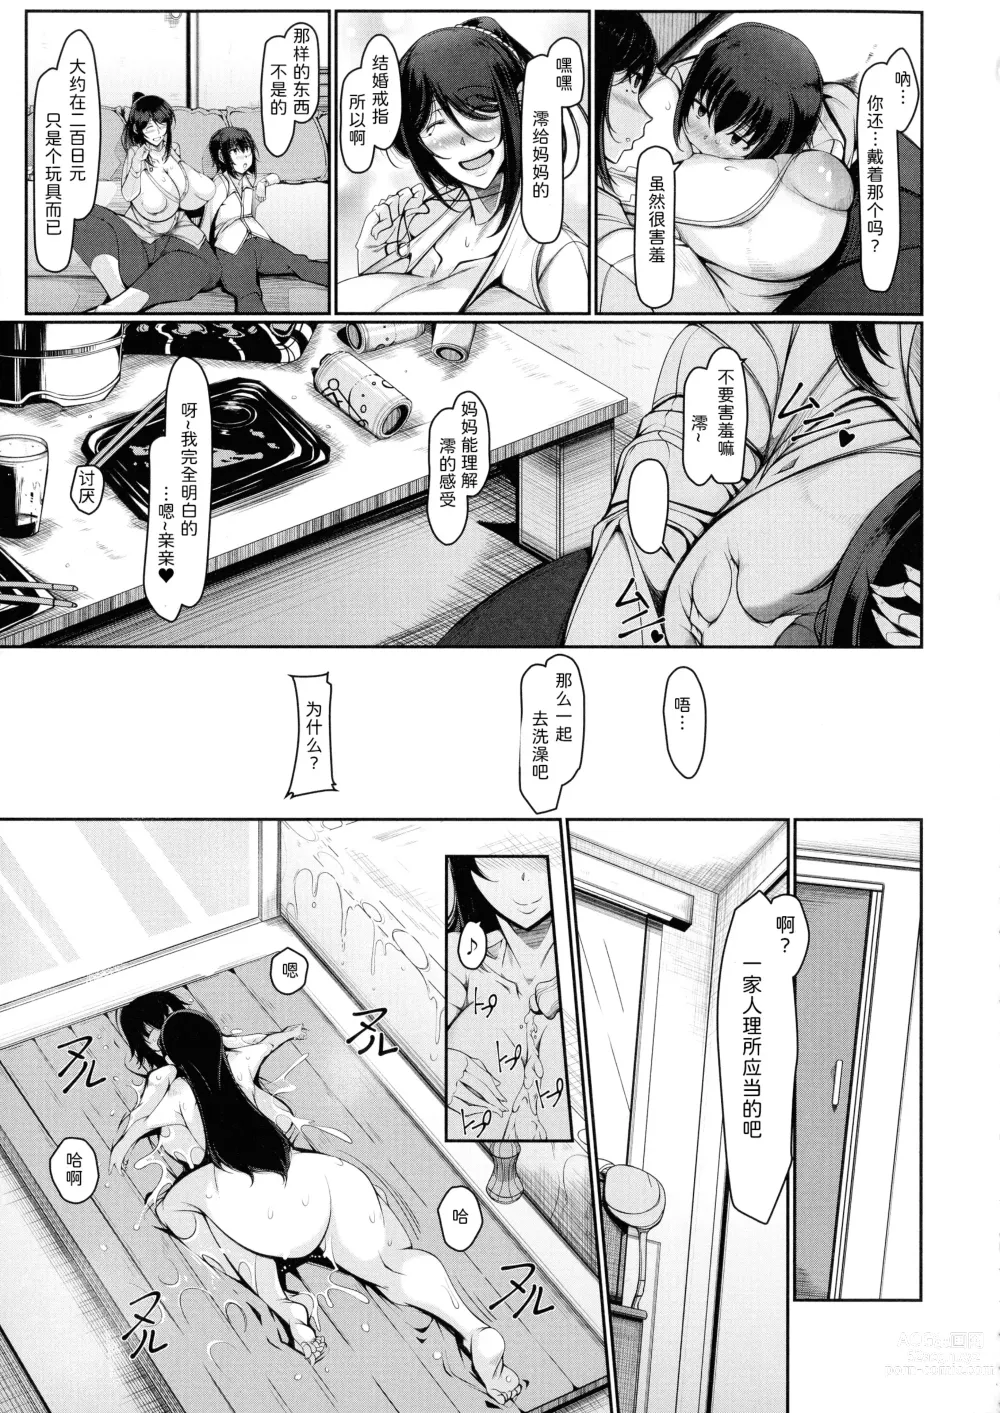 Page 8 of manga Barikyari Onna Joshi Mama Iyashino Recreation